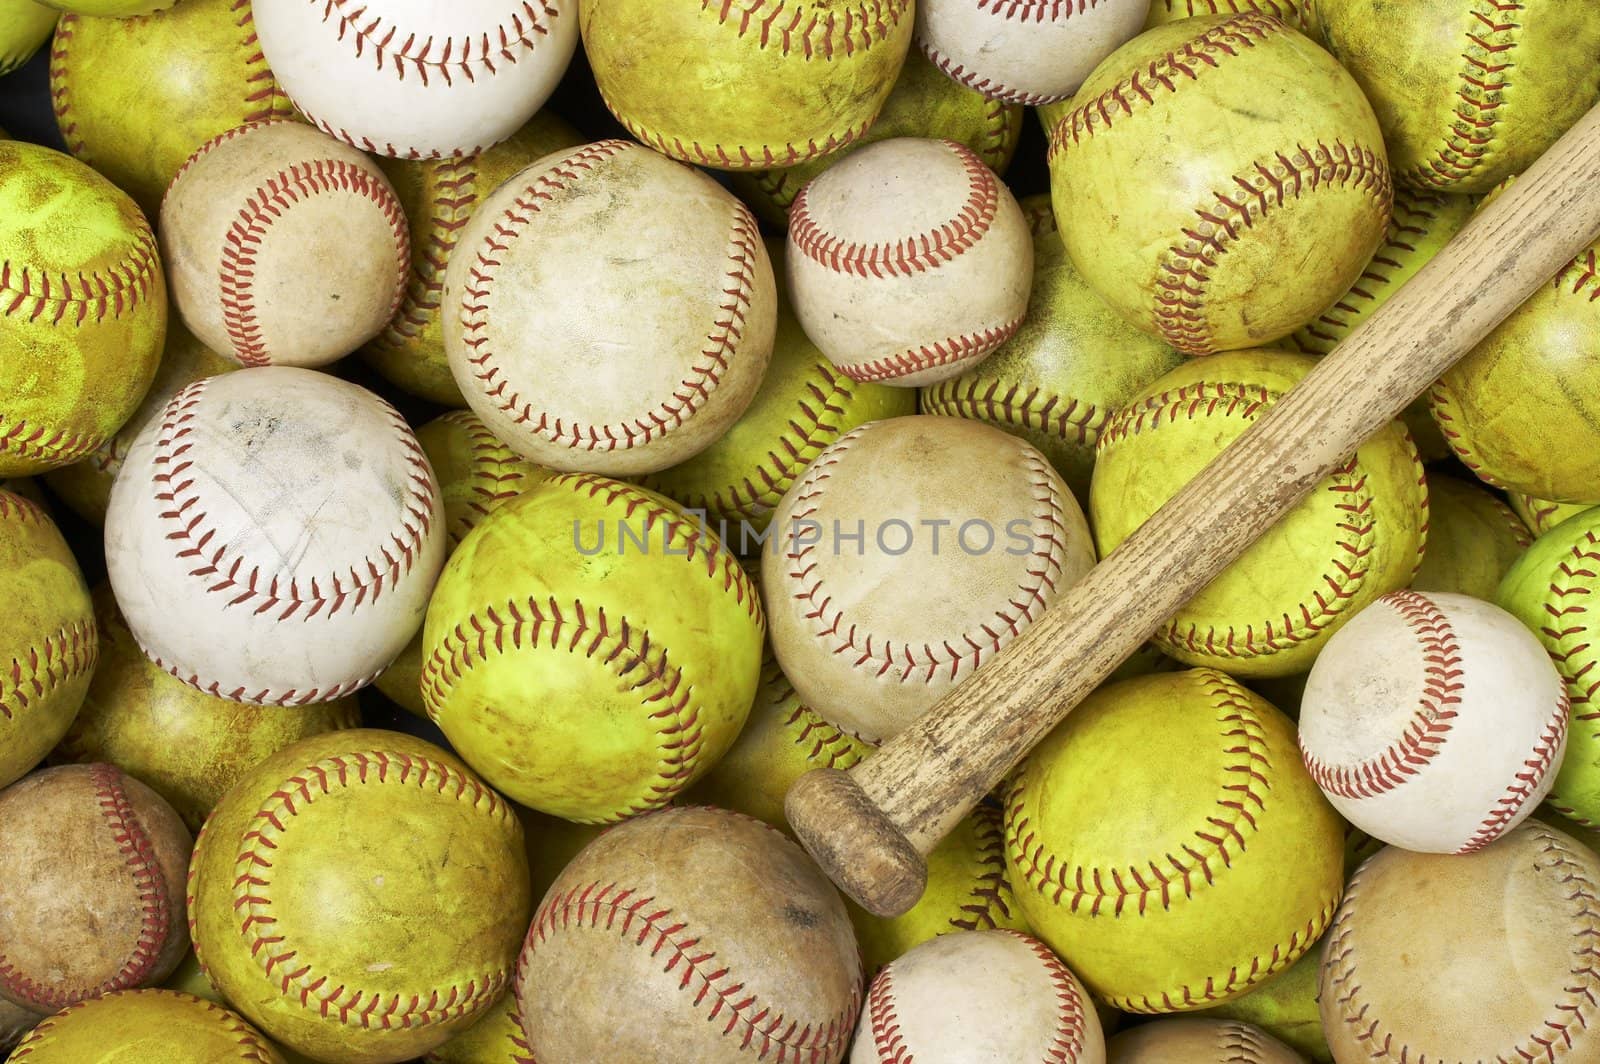 a picture of baseballs softballs and a bat